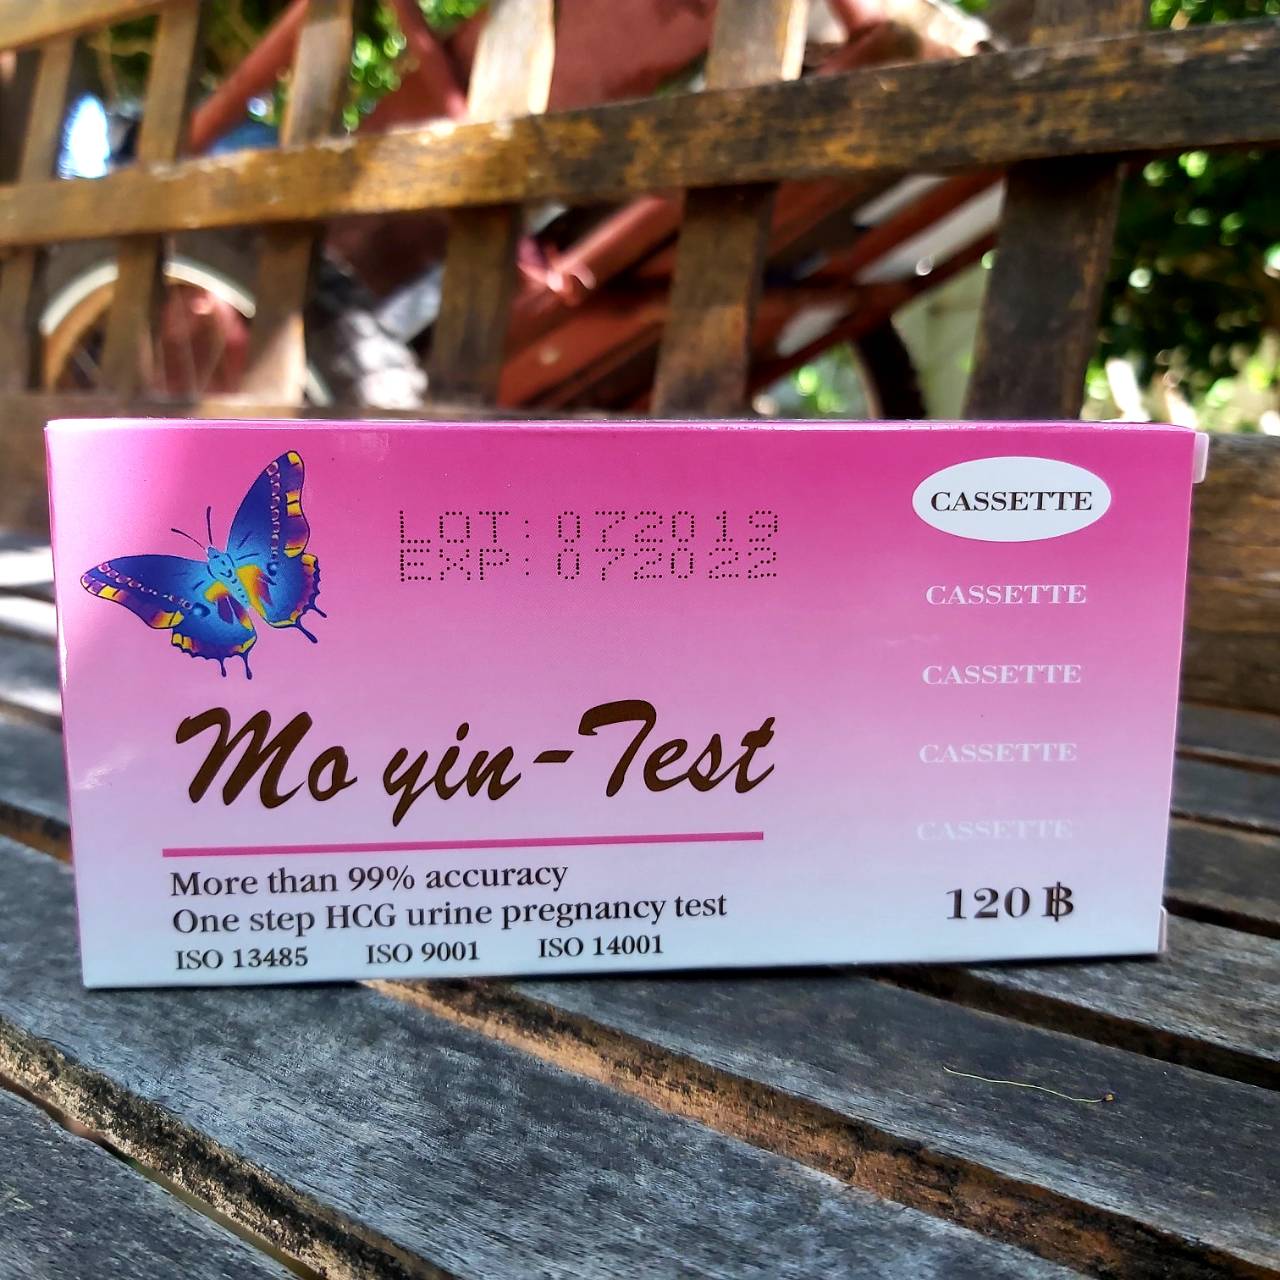 Ma gin-Test ชุดตรวจสอบการตั้งครรภ์ ชนิดหยด hCG One Step Pregnancy Test (Cassette) (Urine) ให้ผลถูกต้อง 99.99%